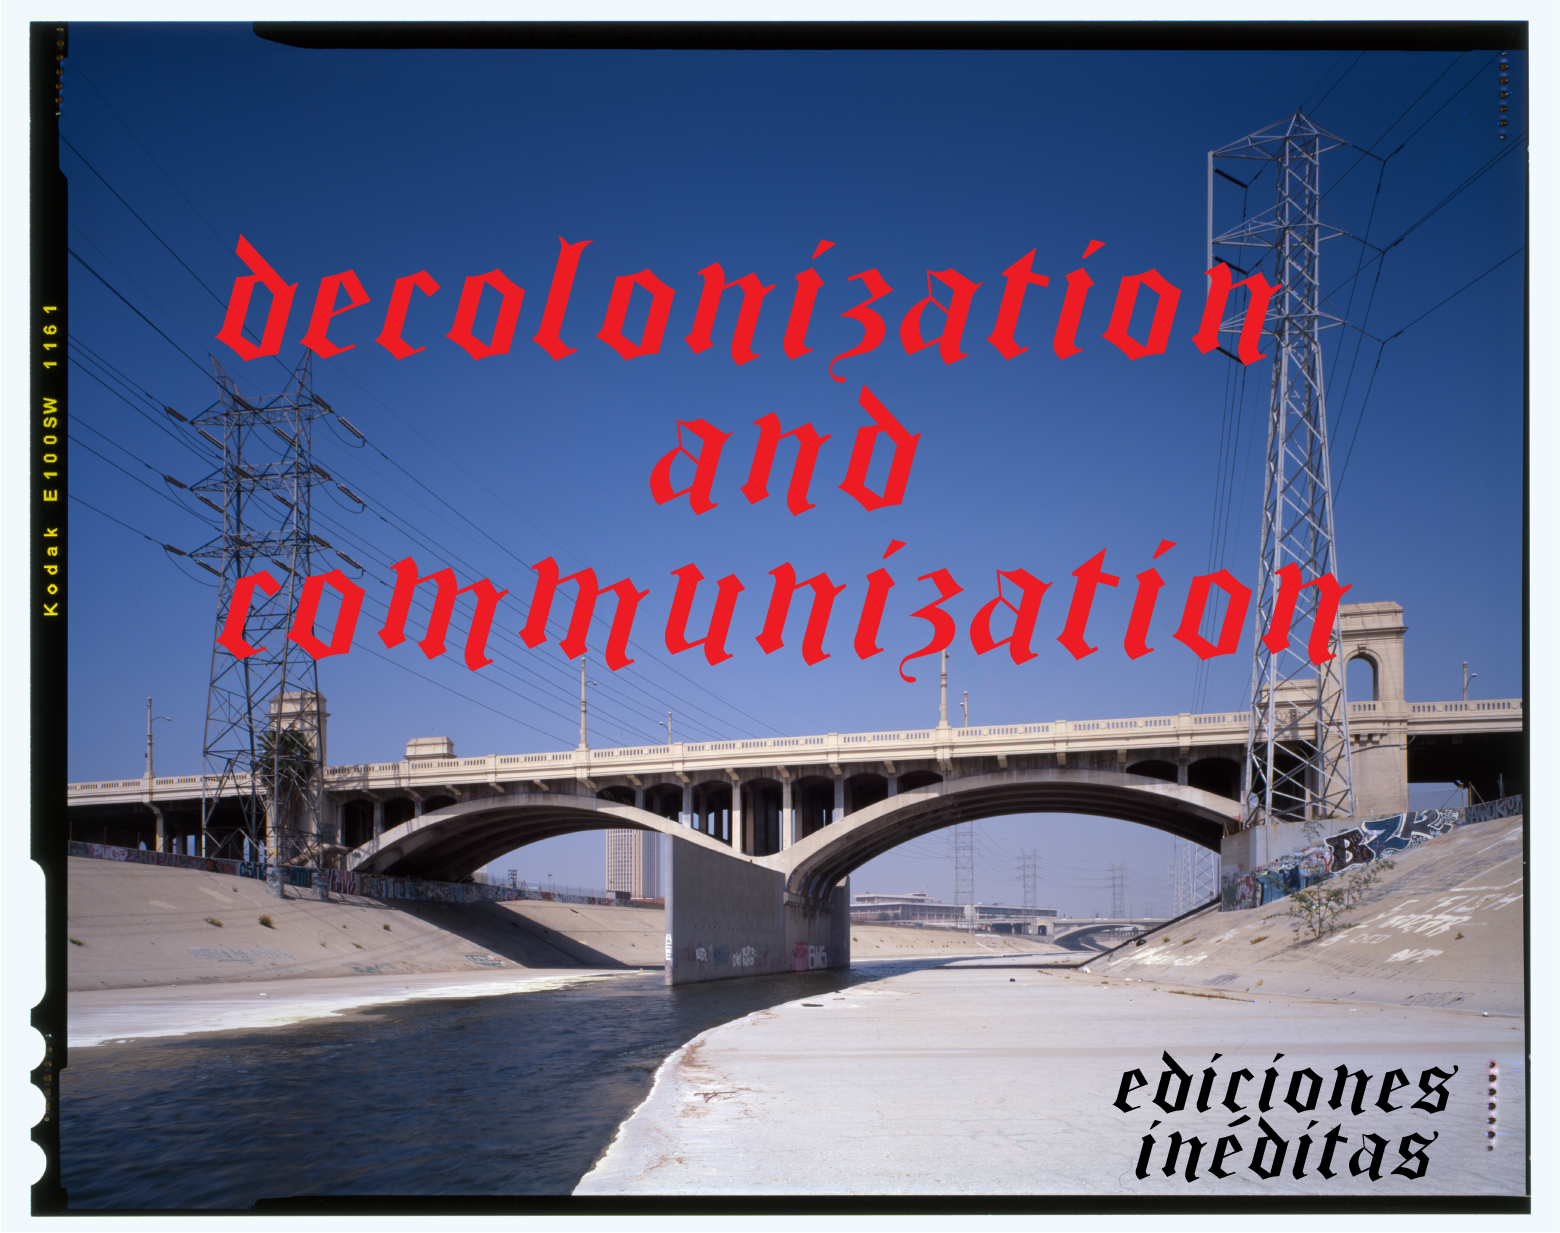 Decolonization & Communization